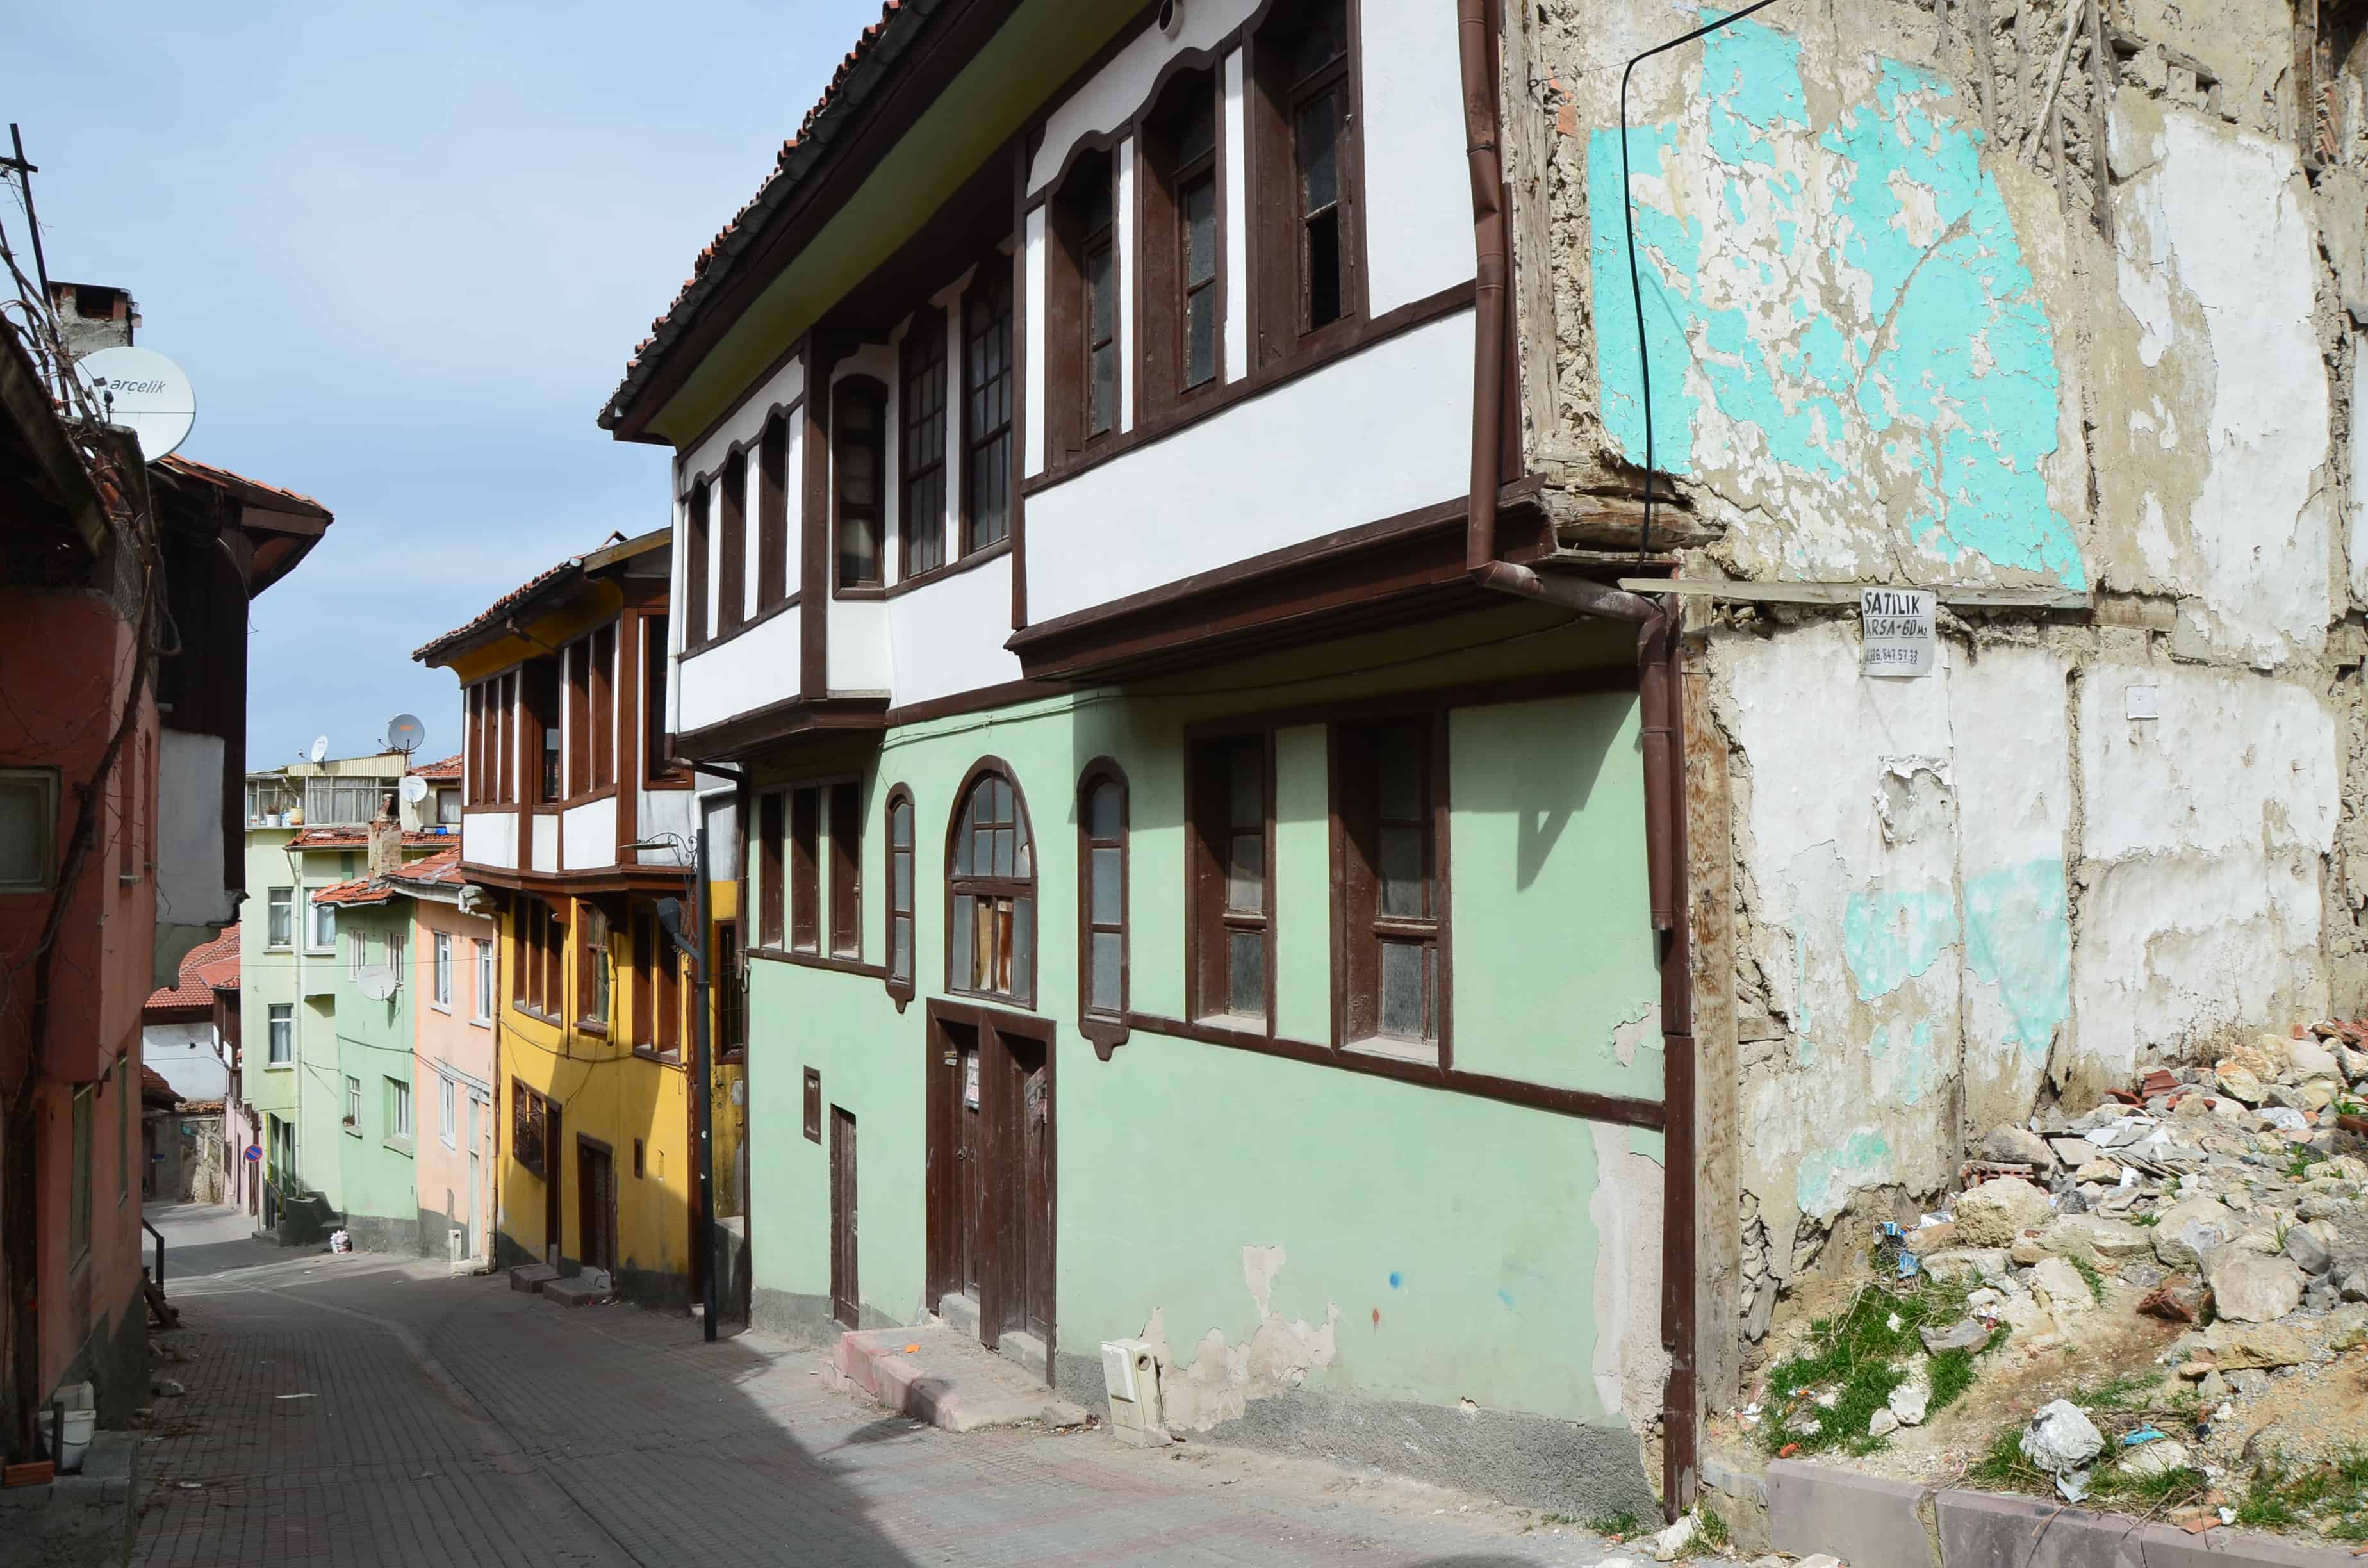 Ahi Erbasan Street in Kütahya, Turkey